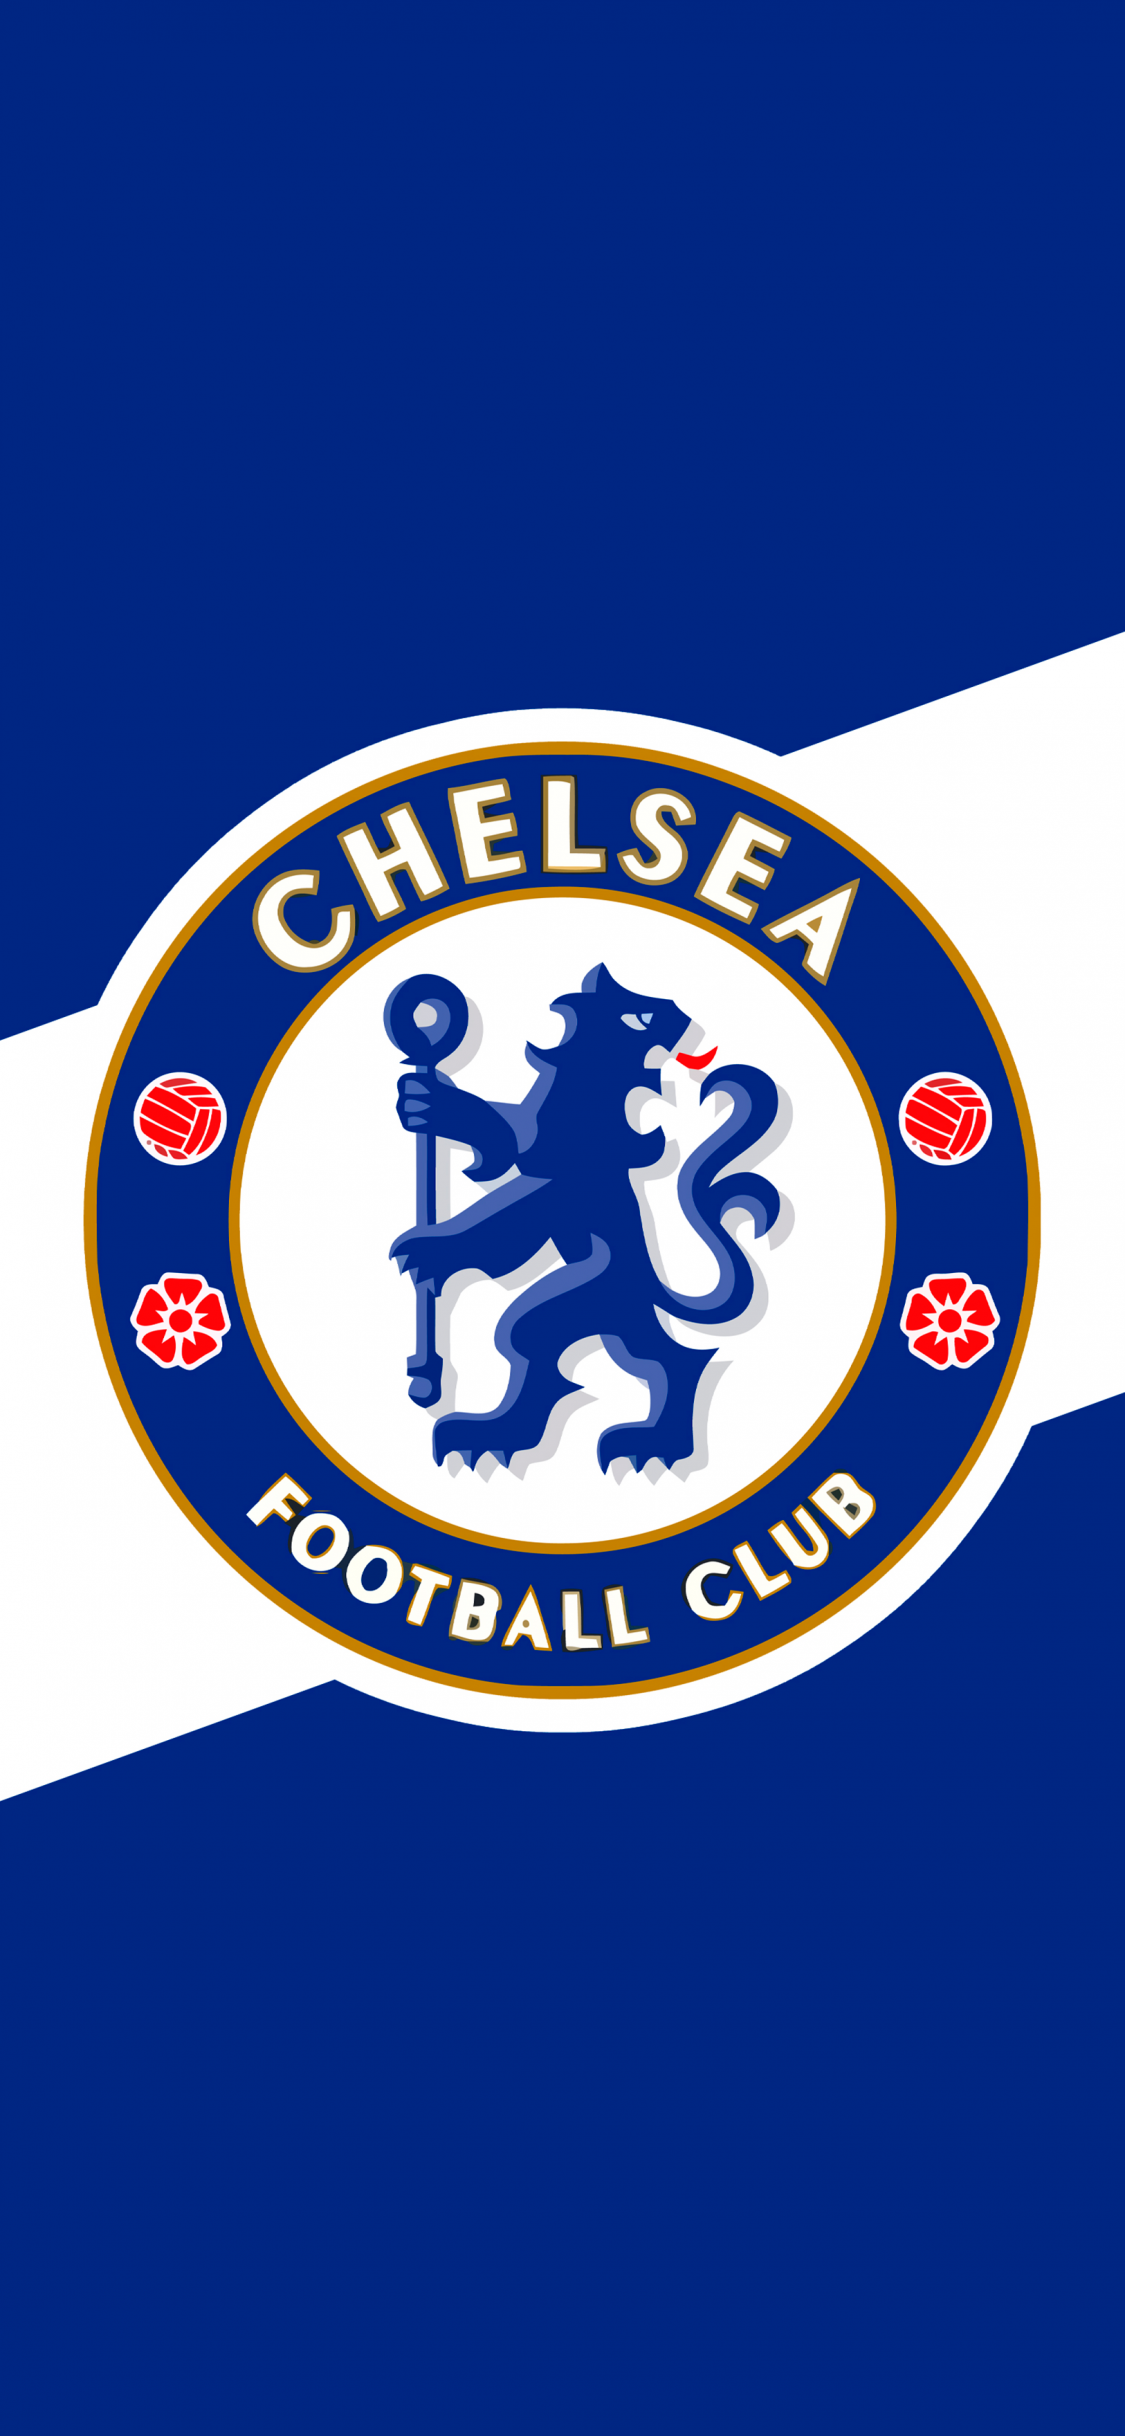 Chelsea FC Wallpaper 4K, Football club, 5K, Sports